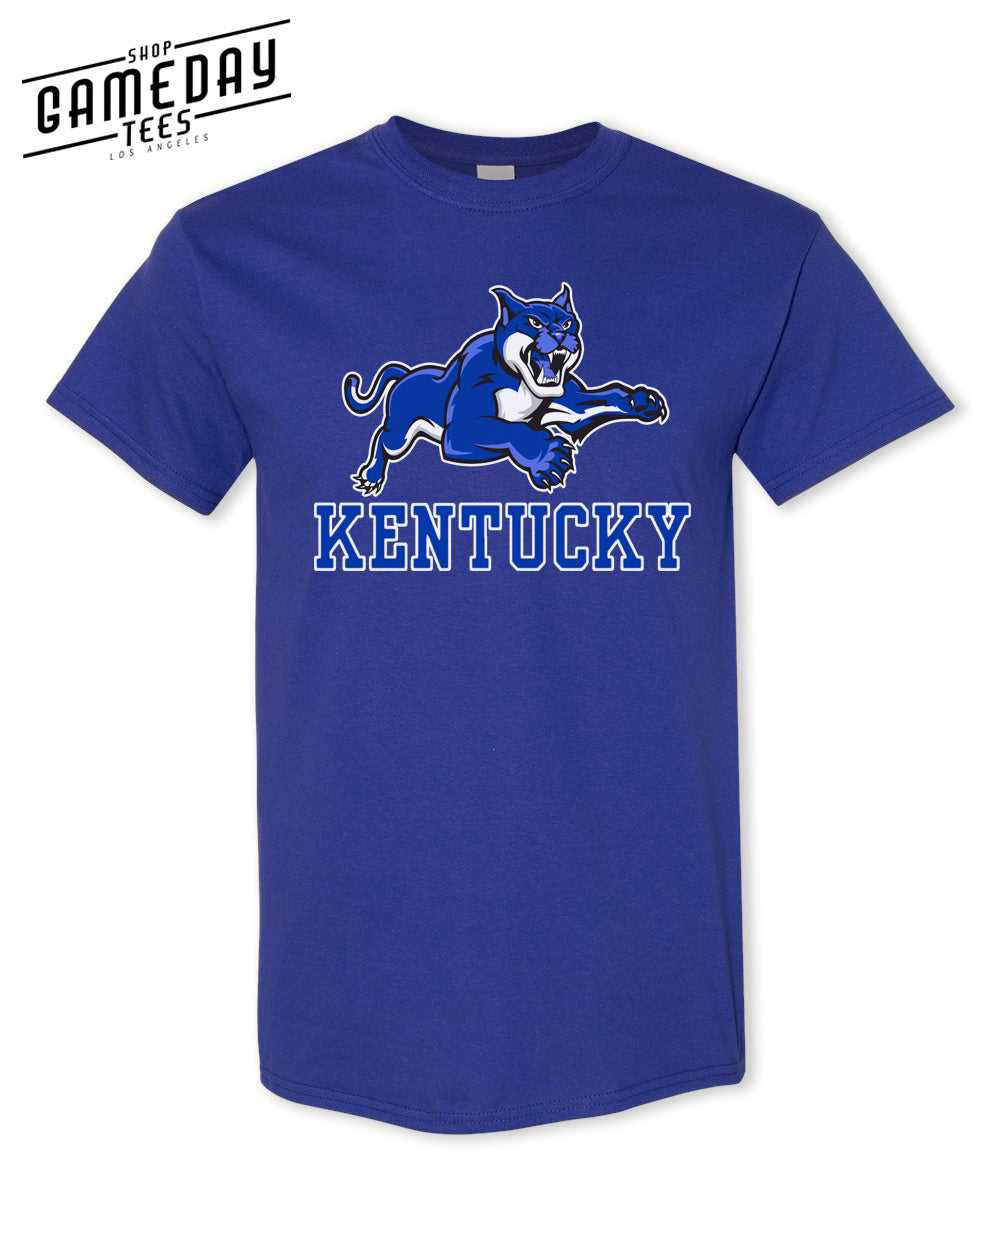 University Of Kentucky Gameday Tees University Of Kentucky Wildcats Unisex T-Shirt College Apparel Collection University GameDay Football Matching Tee Clothing Black1